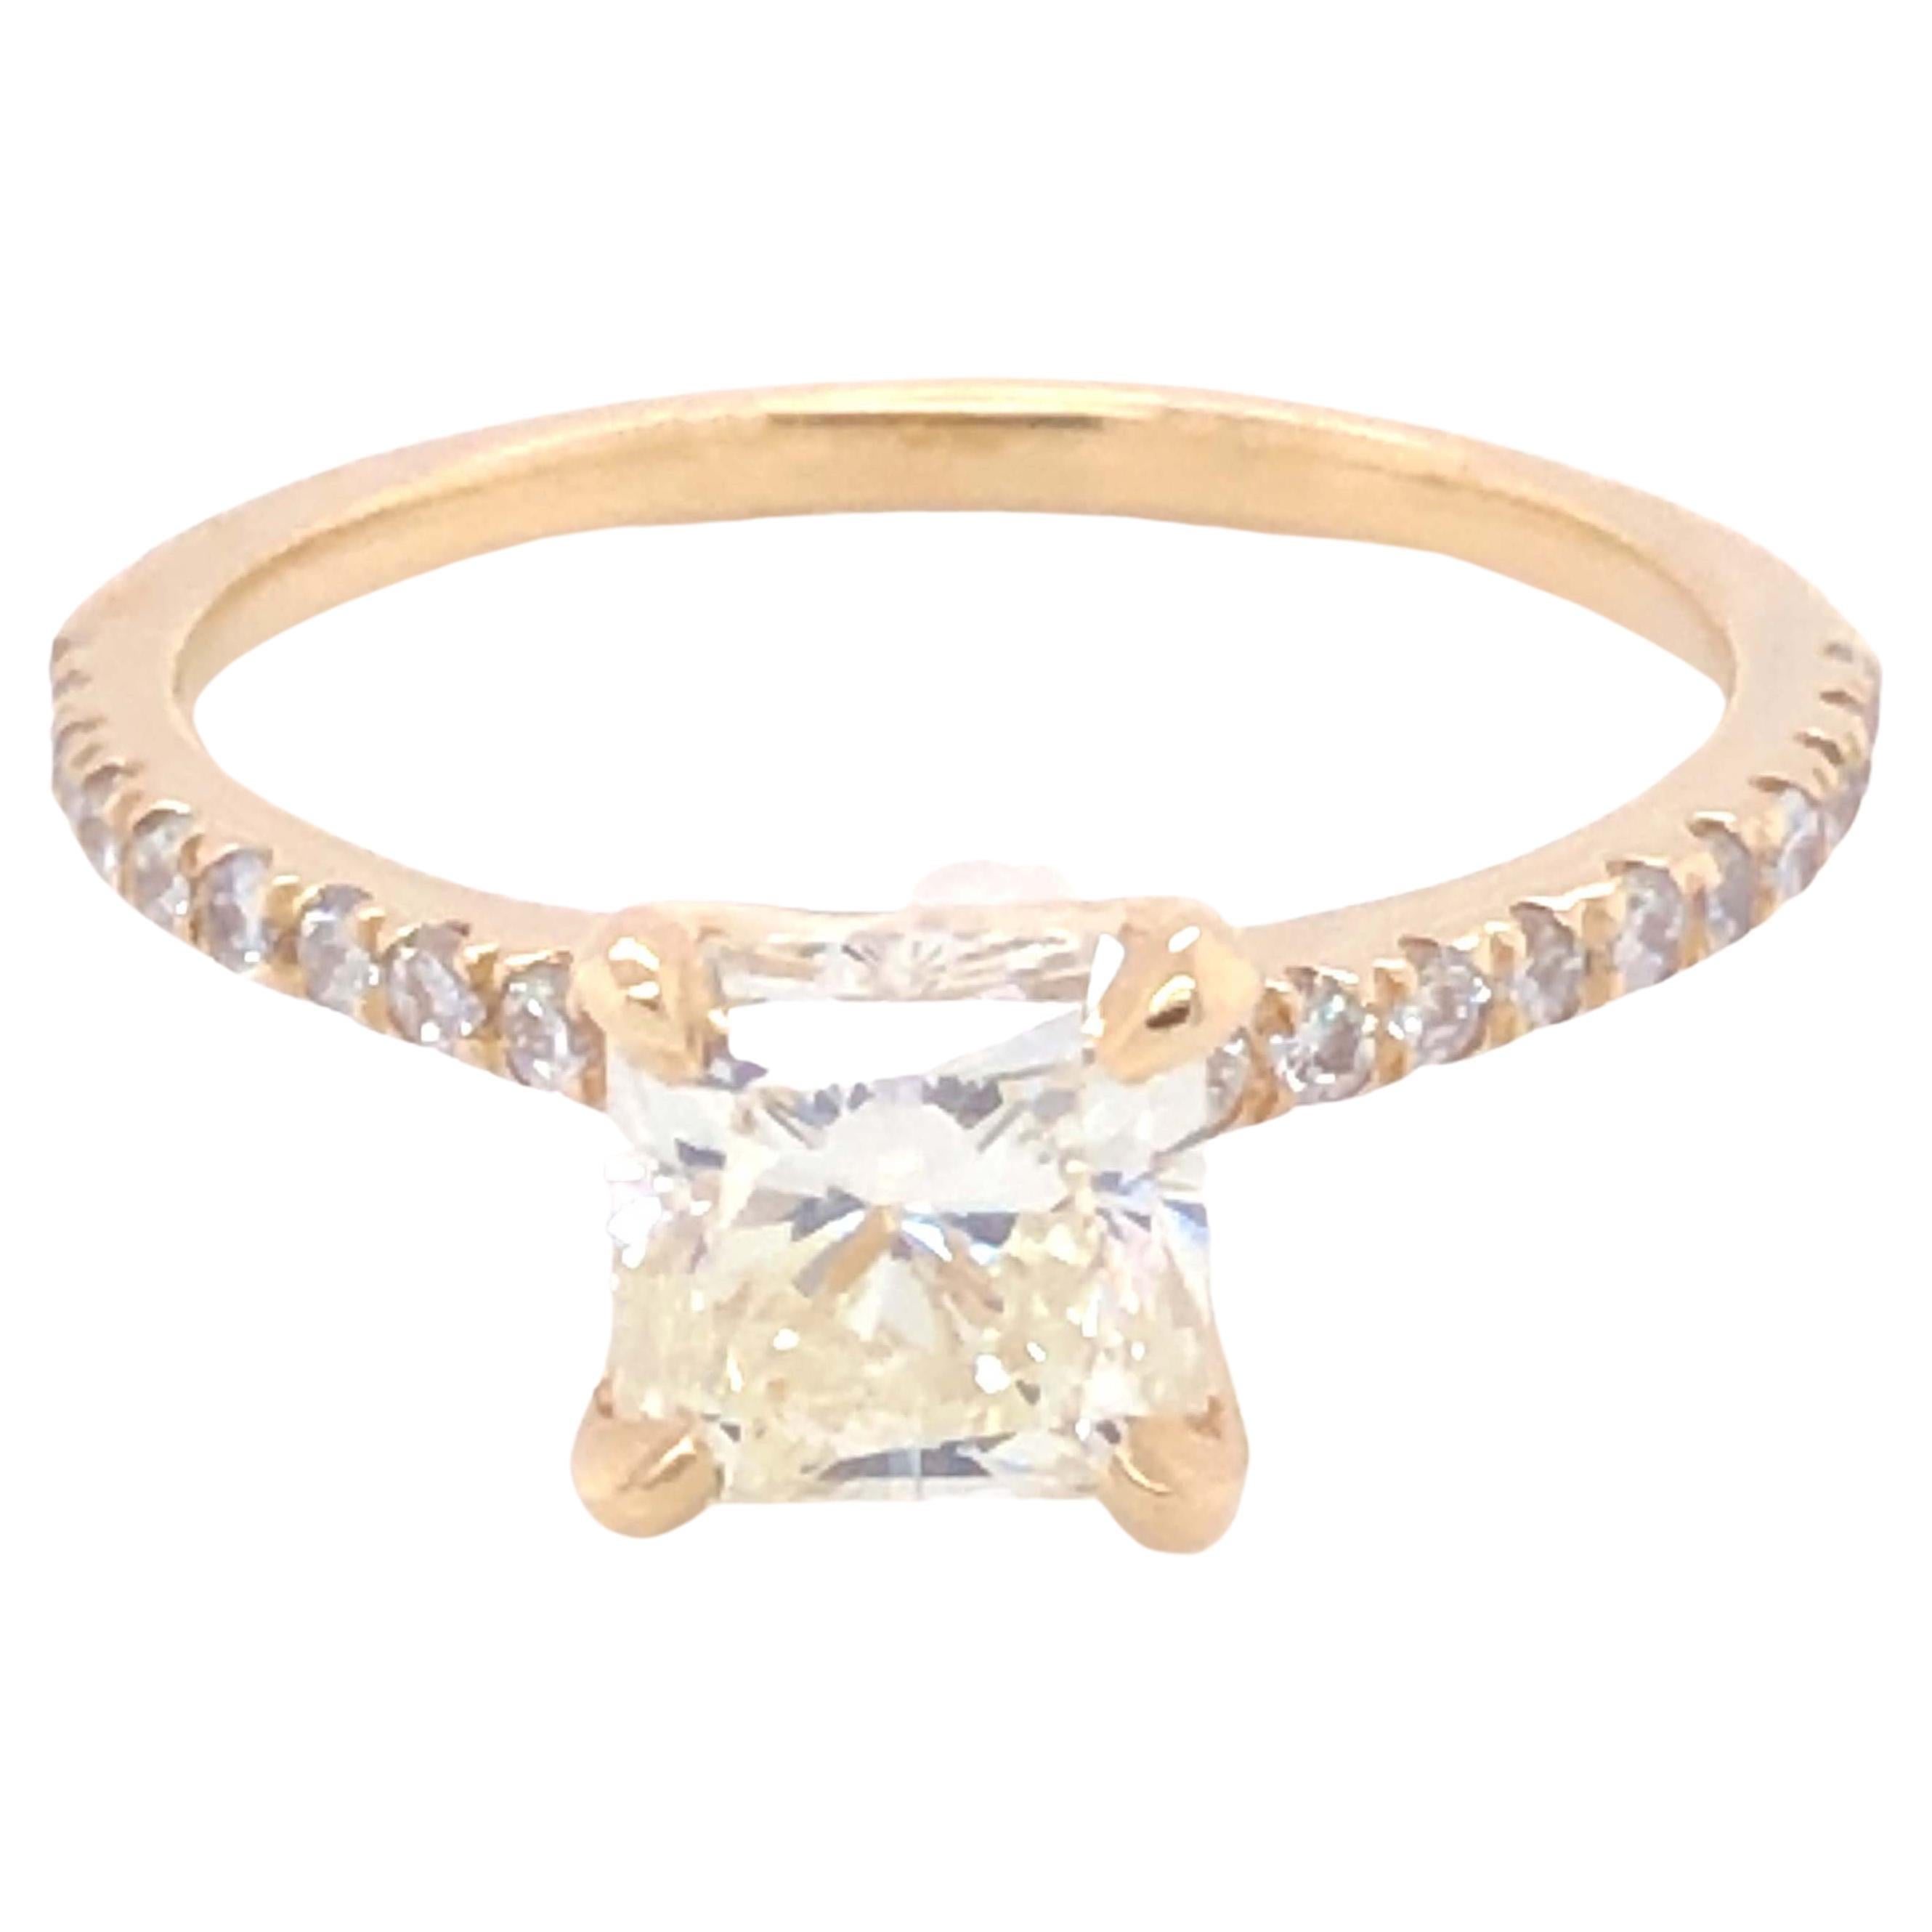 Radiant Cut 1.23 Carat Center Stone Diamond Engagement Ring, 14k Yellow Gold